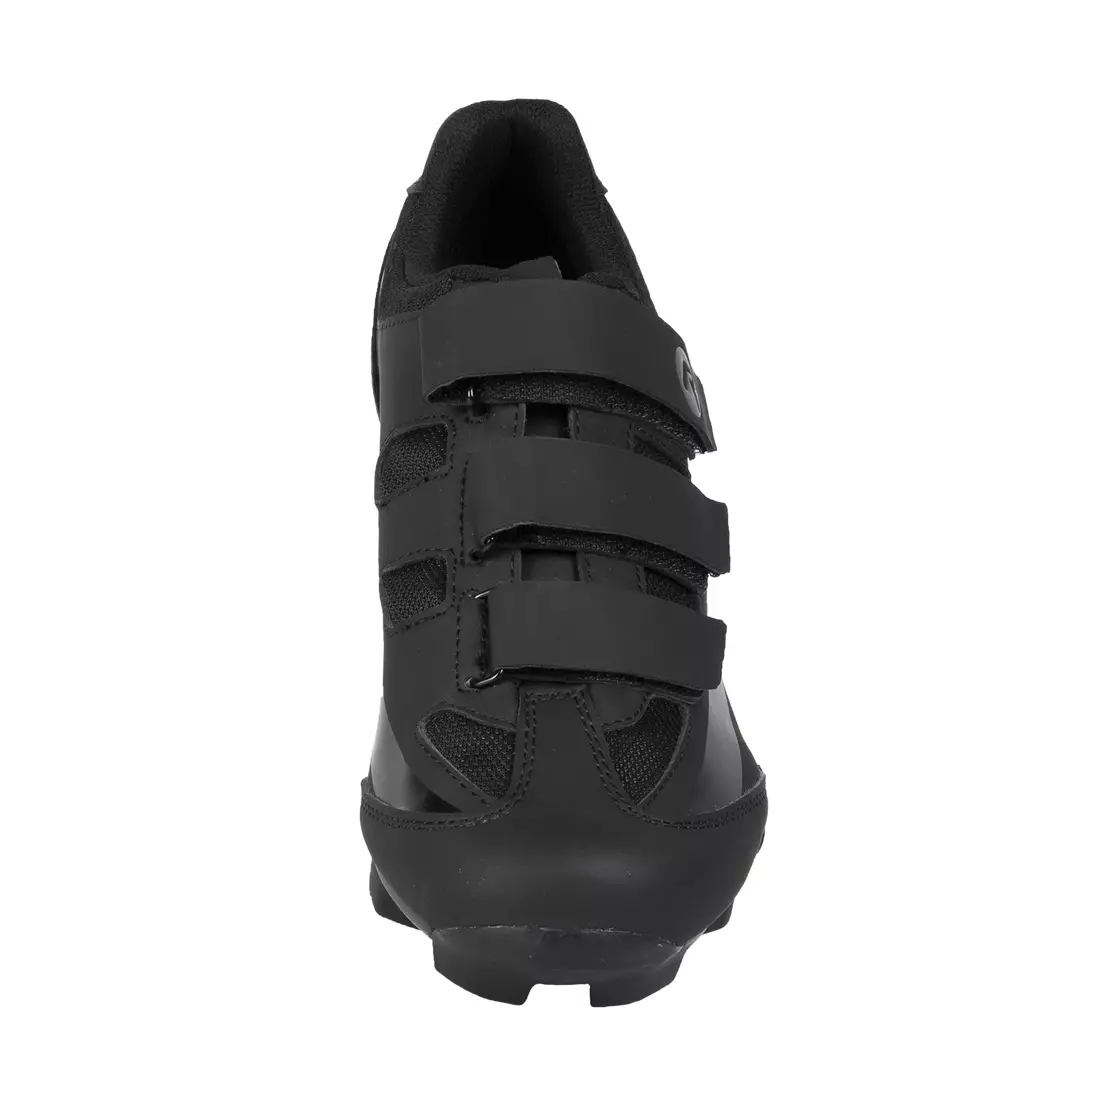 ROGELLI men's cycling shoes MTB AB-533 black